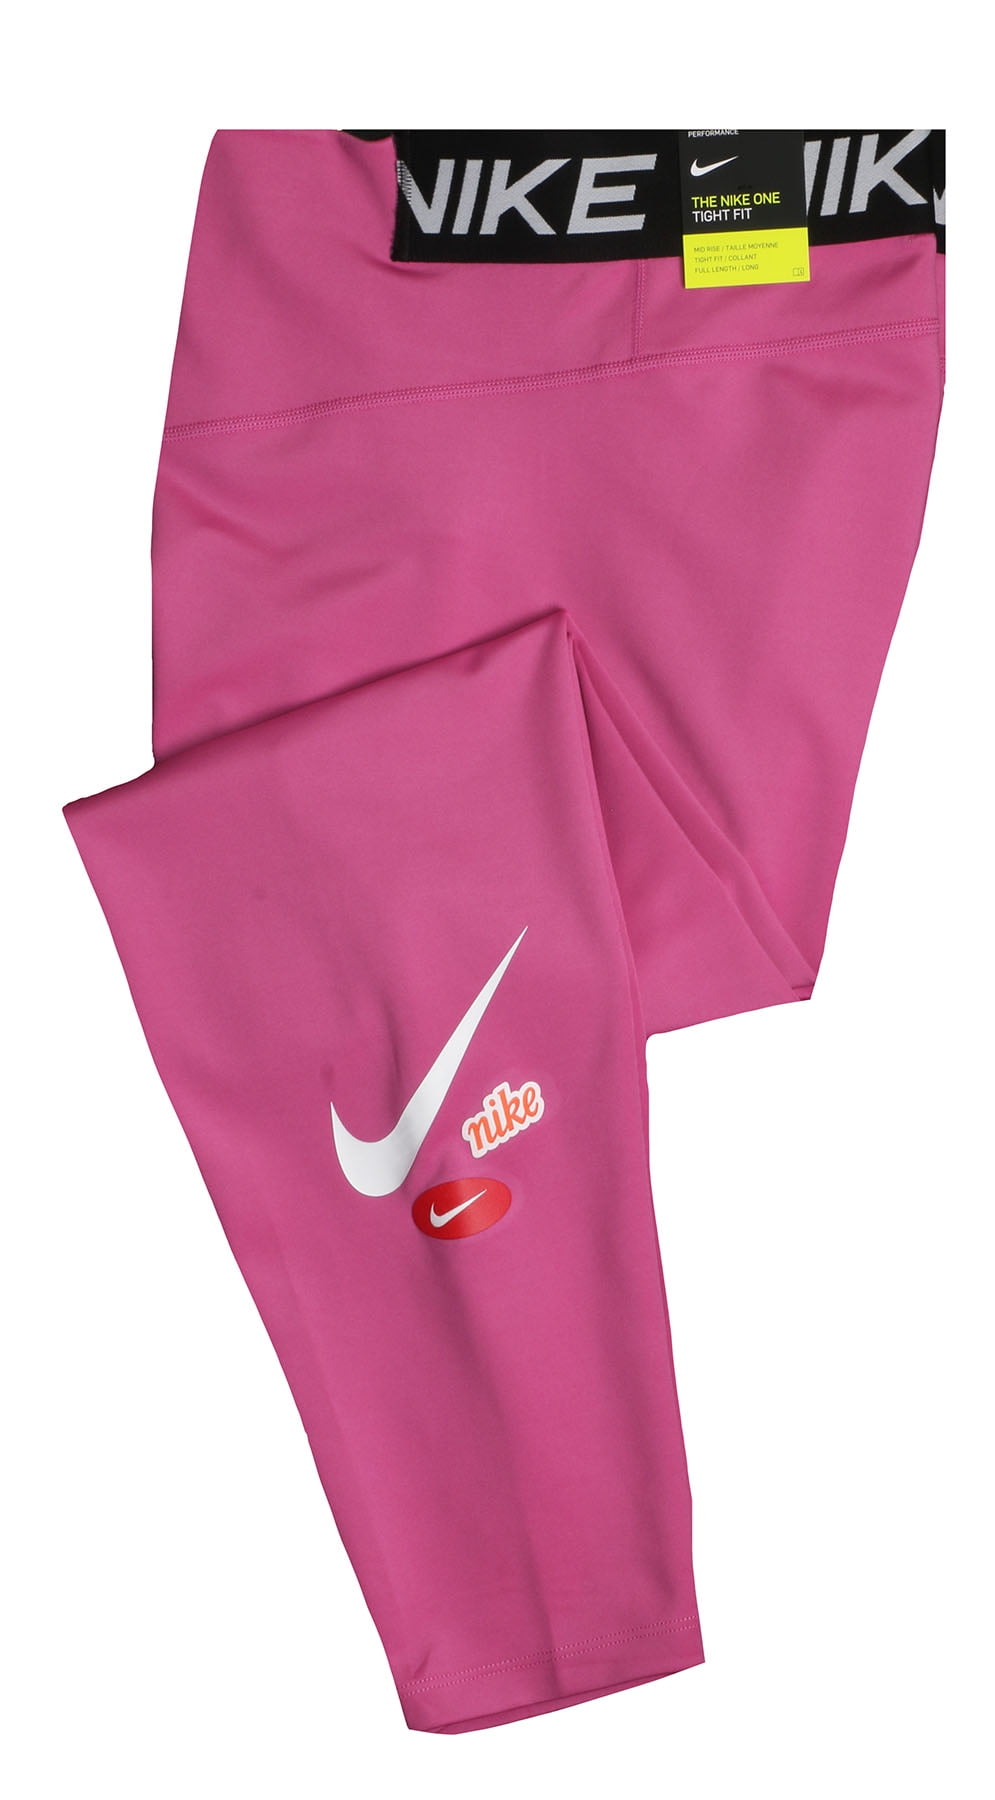 grosor hacer los deberes administrar Nike Women's Plus JDI One Tight Training Pants - Walmart.com